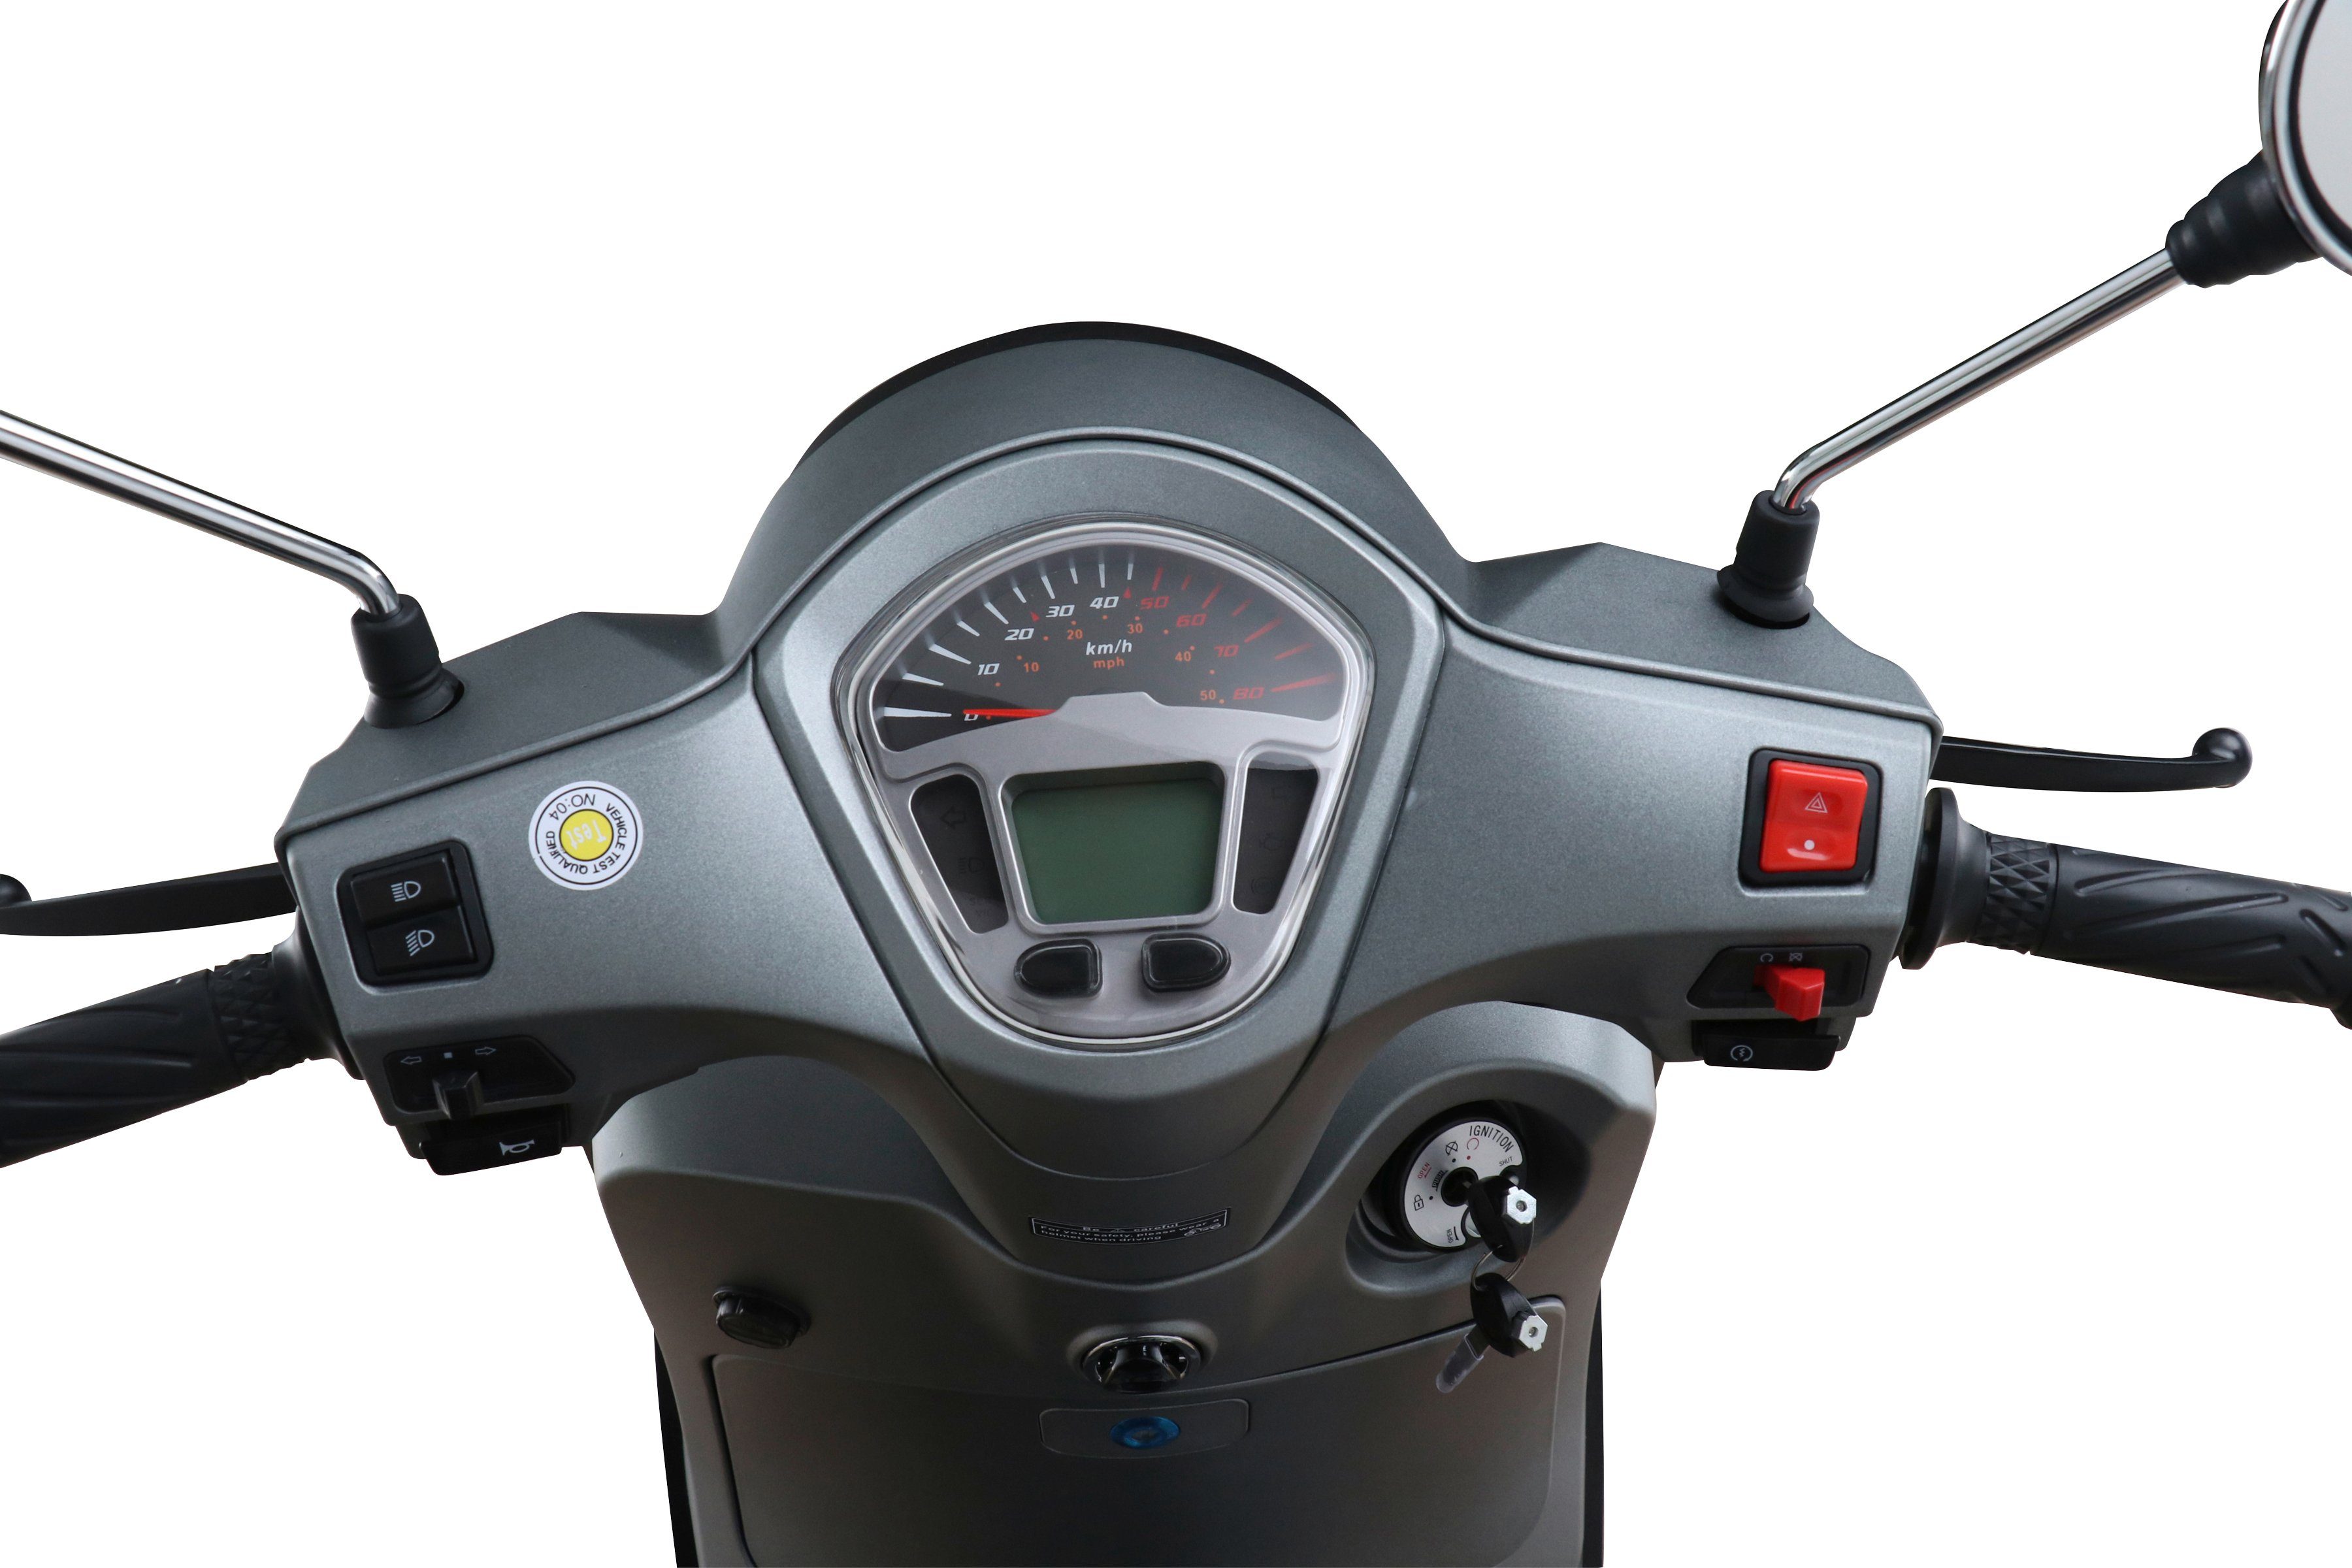 Alpha Motors Motorroller Vita, ccm, 125 Euro 5 km/h, 85